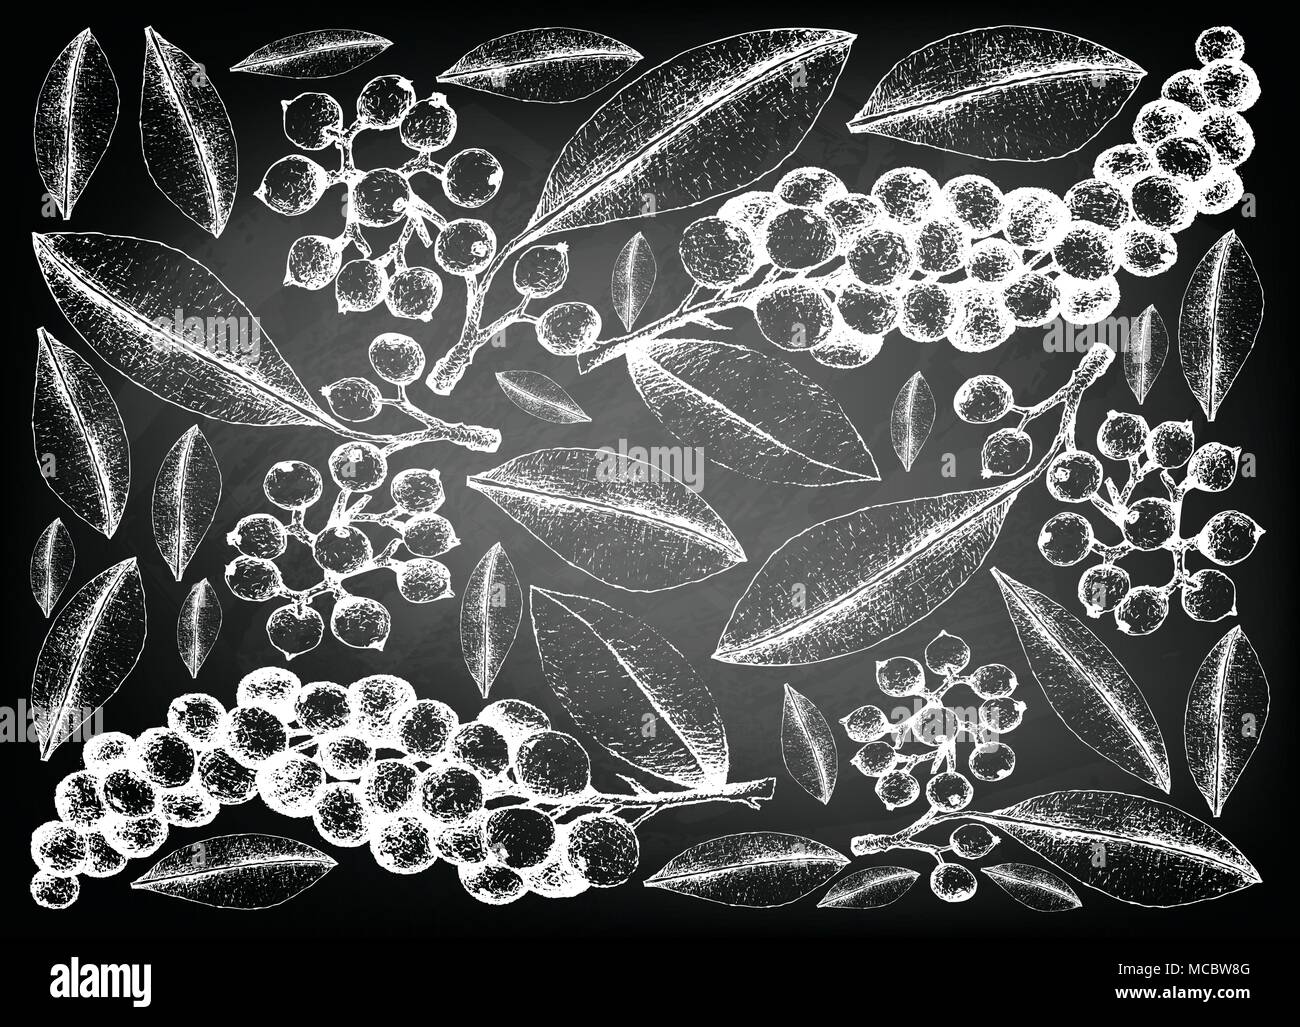 Berry Fruit, Illustration Wallpaper Background of Hand Drawn Sketch of Carallia Brachiata and Antidesma Thwaitesianum Fruits on Black Chalkboard. Stock Vector